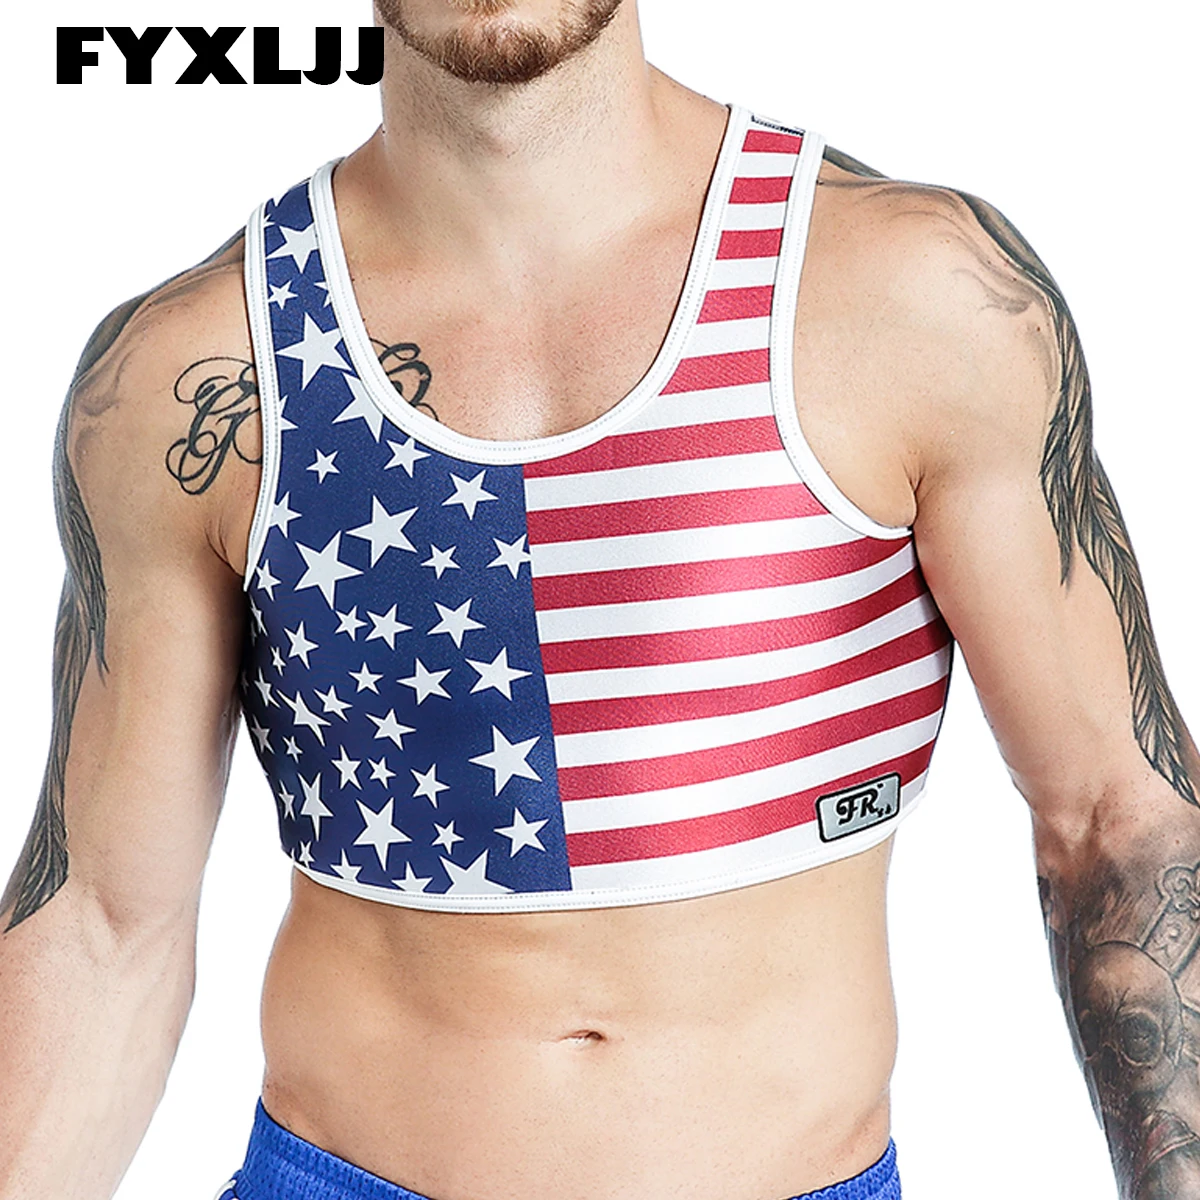 

FYXLJJ Men's Tank Top Undershirt Bodybuilding Singlet Fitness Sleeveless Muscle Guys Tank Tops Male Sexy Slim Fit Crop Top Vest